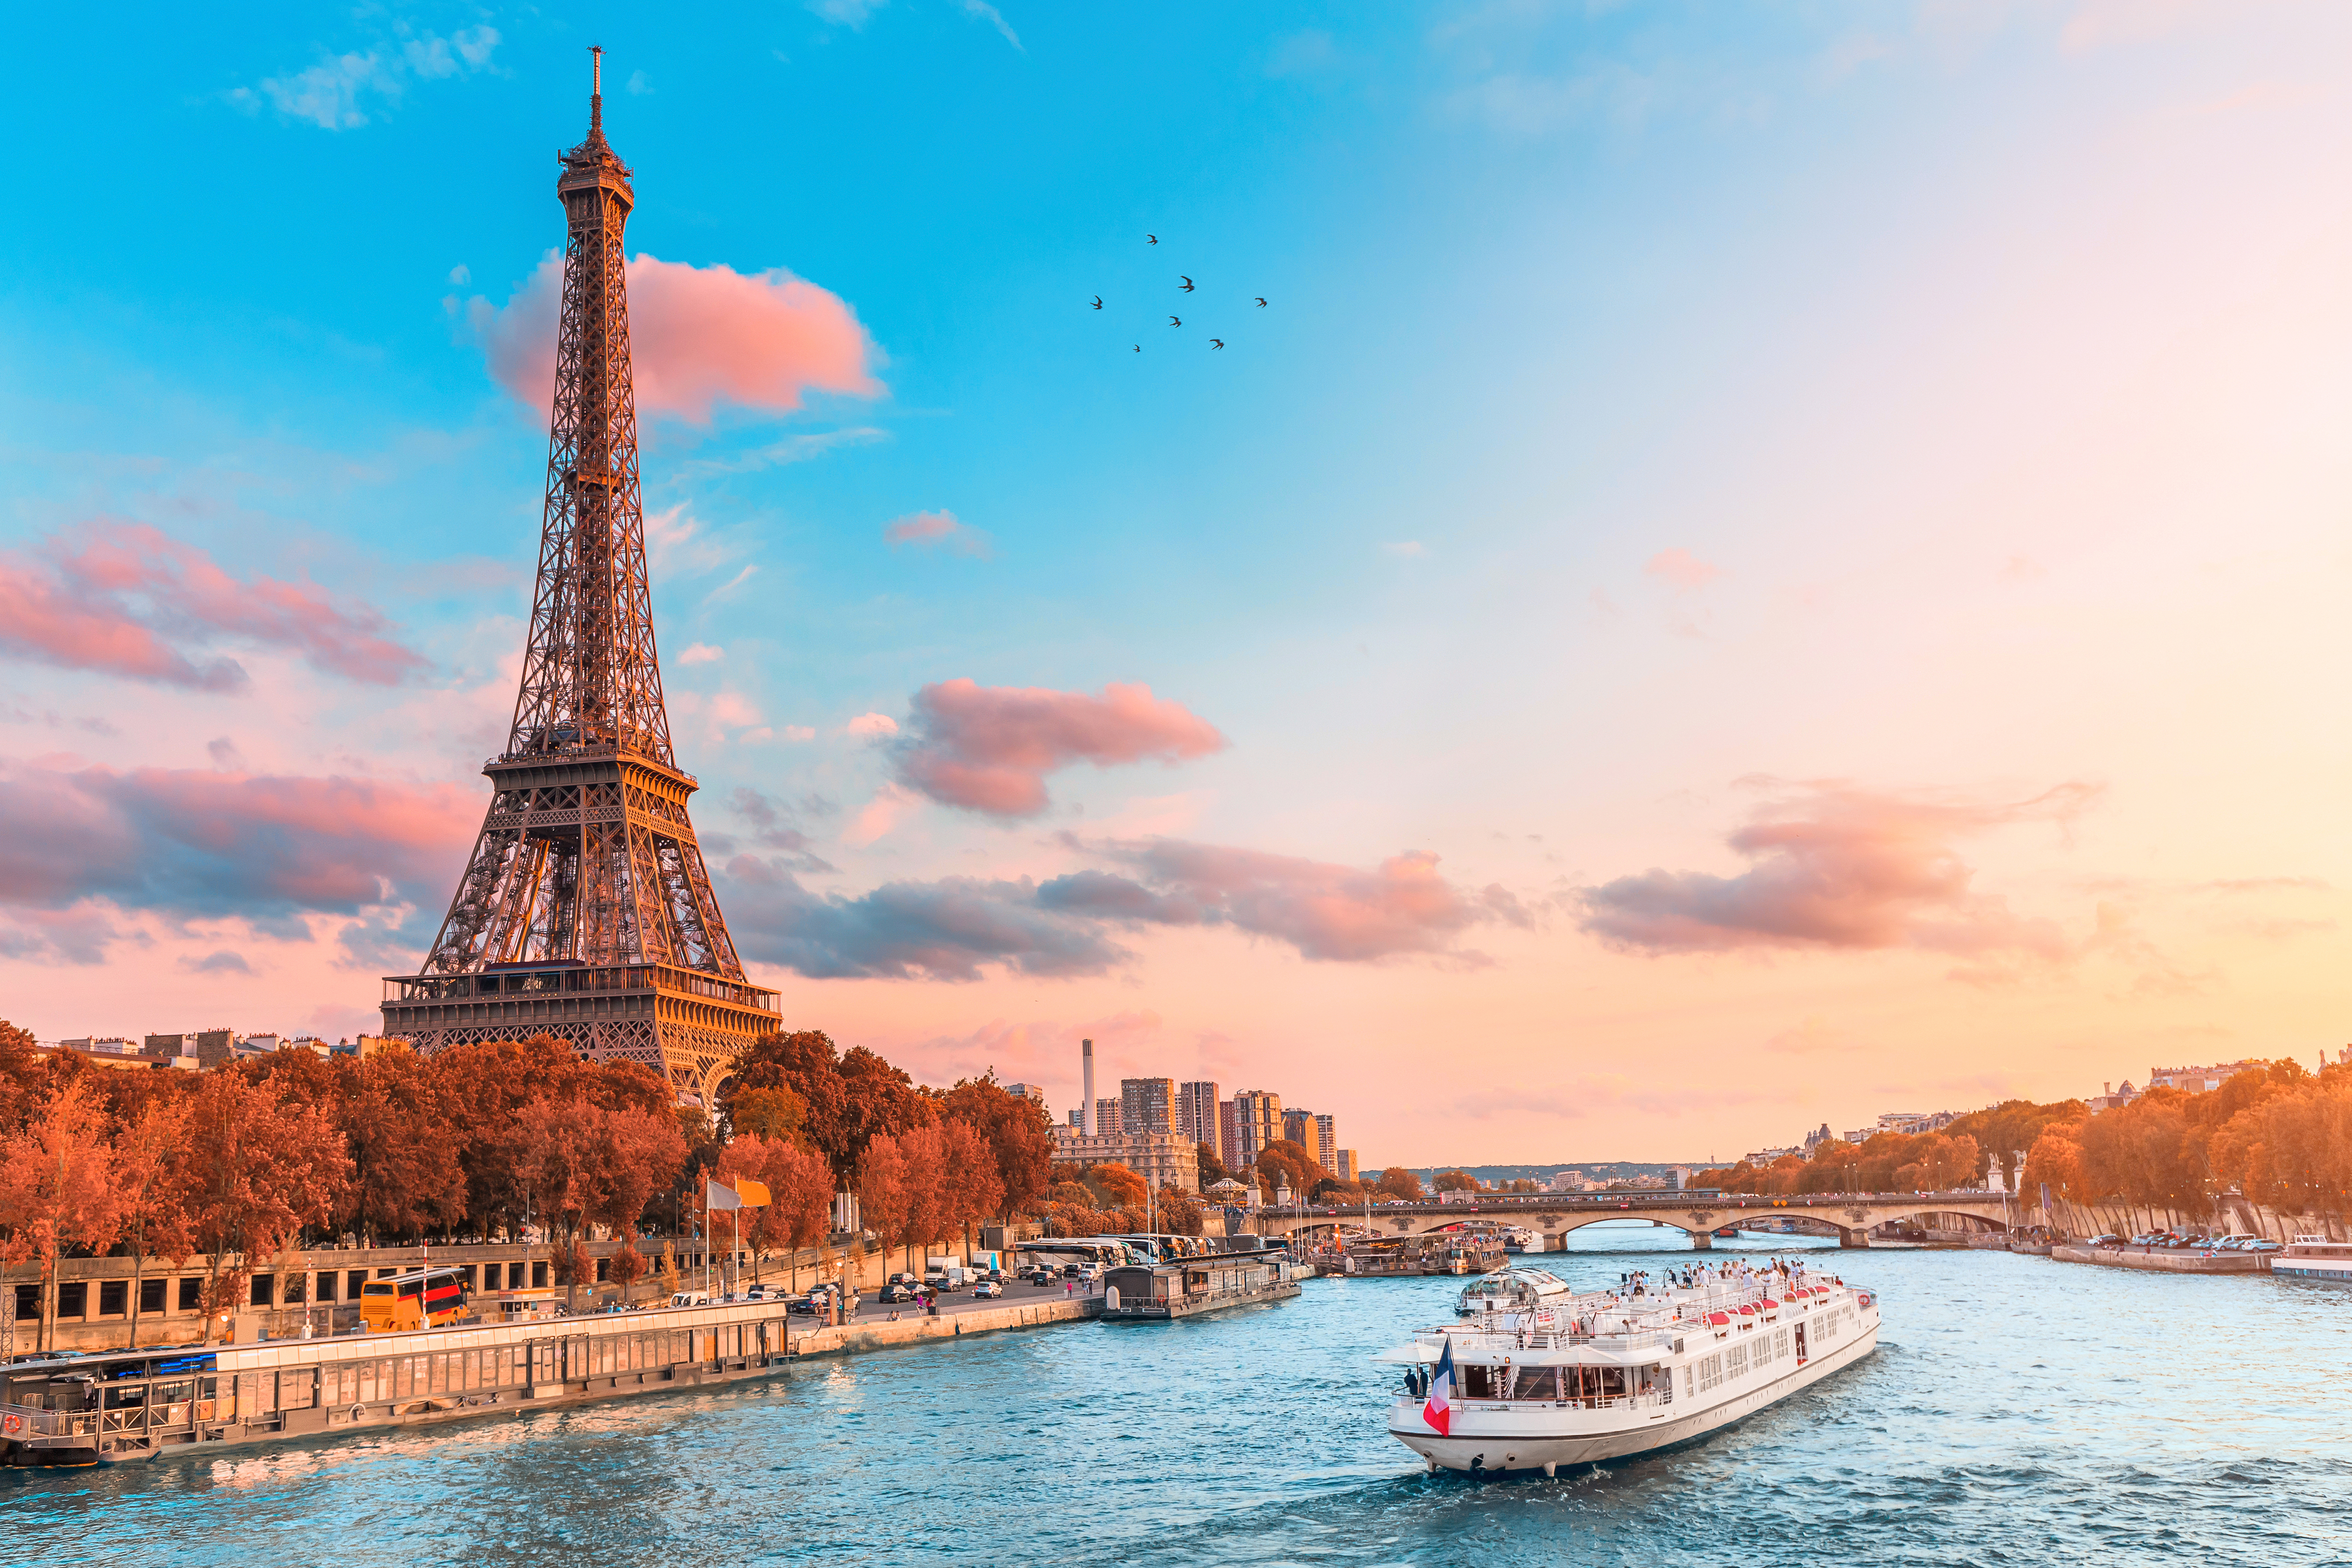  Эйфелева башня как символ оформления ВНЖ Франции через стартап-визу